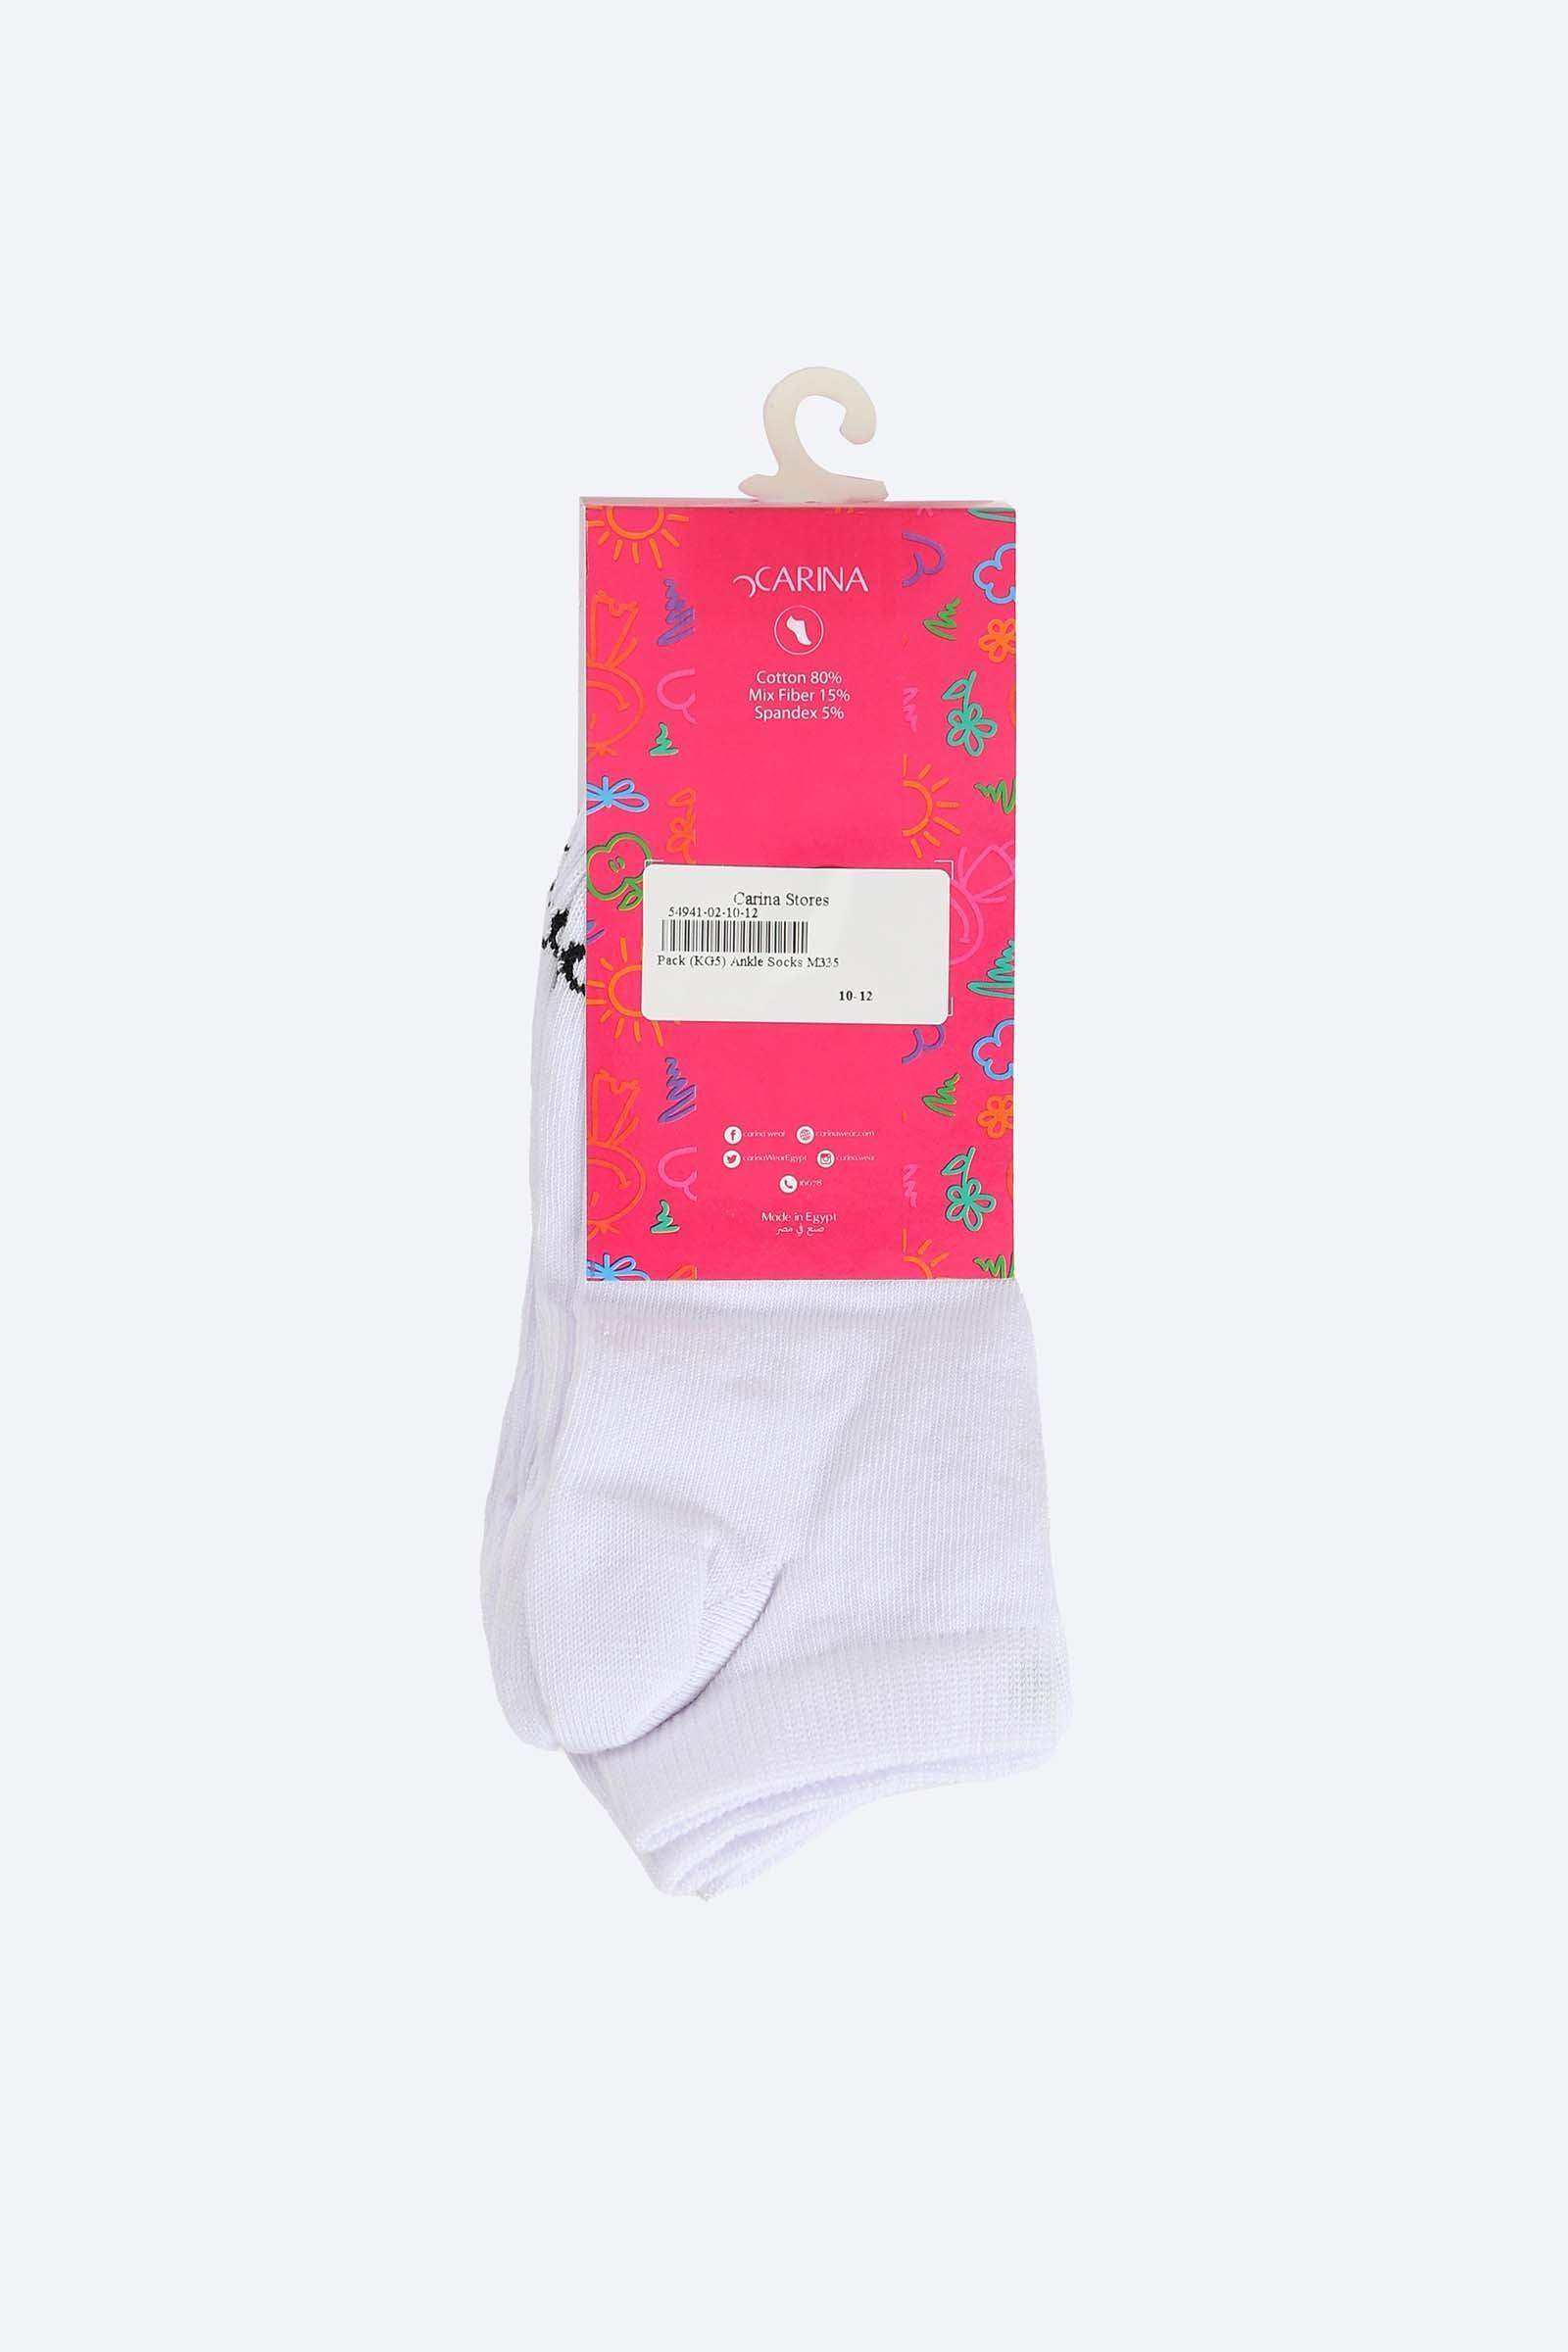 Girly Ankle Length Socks - 5 Pairs - Carina - كارينا